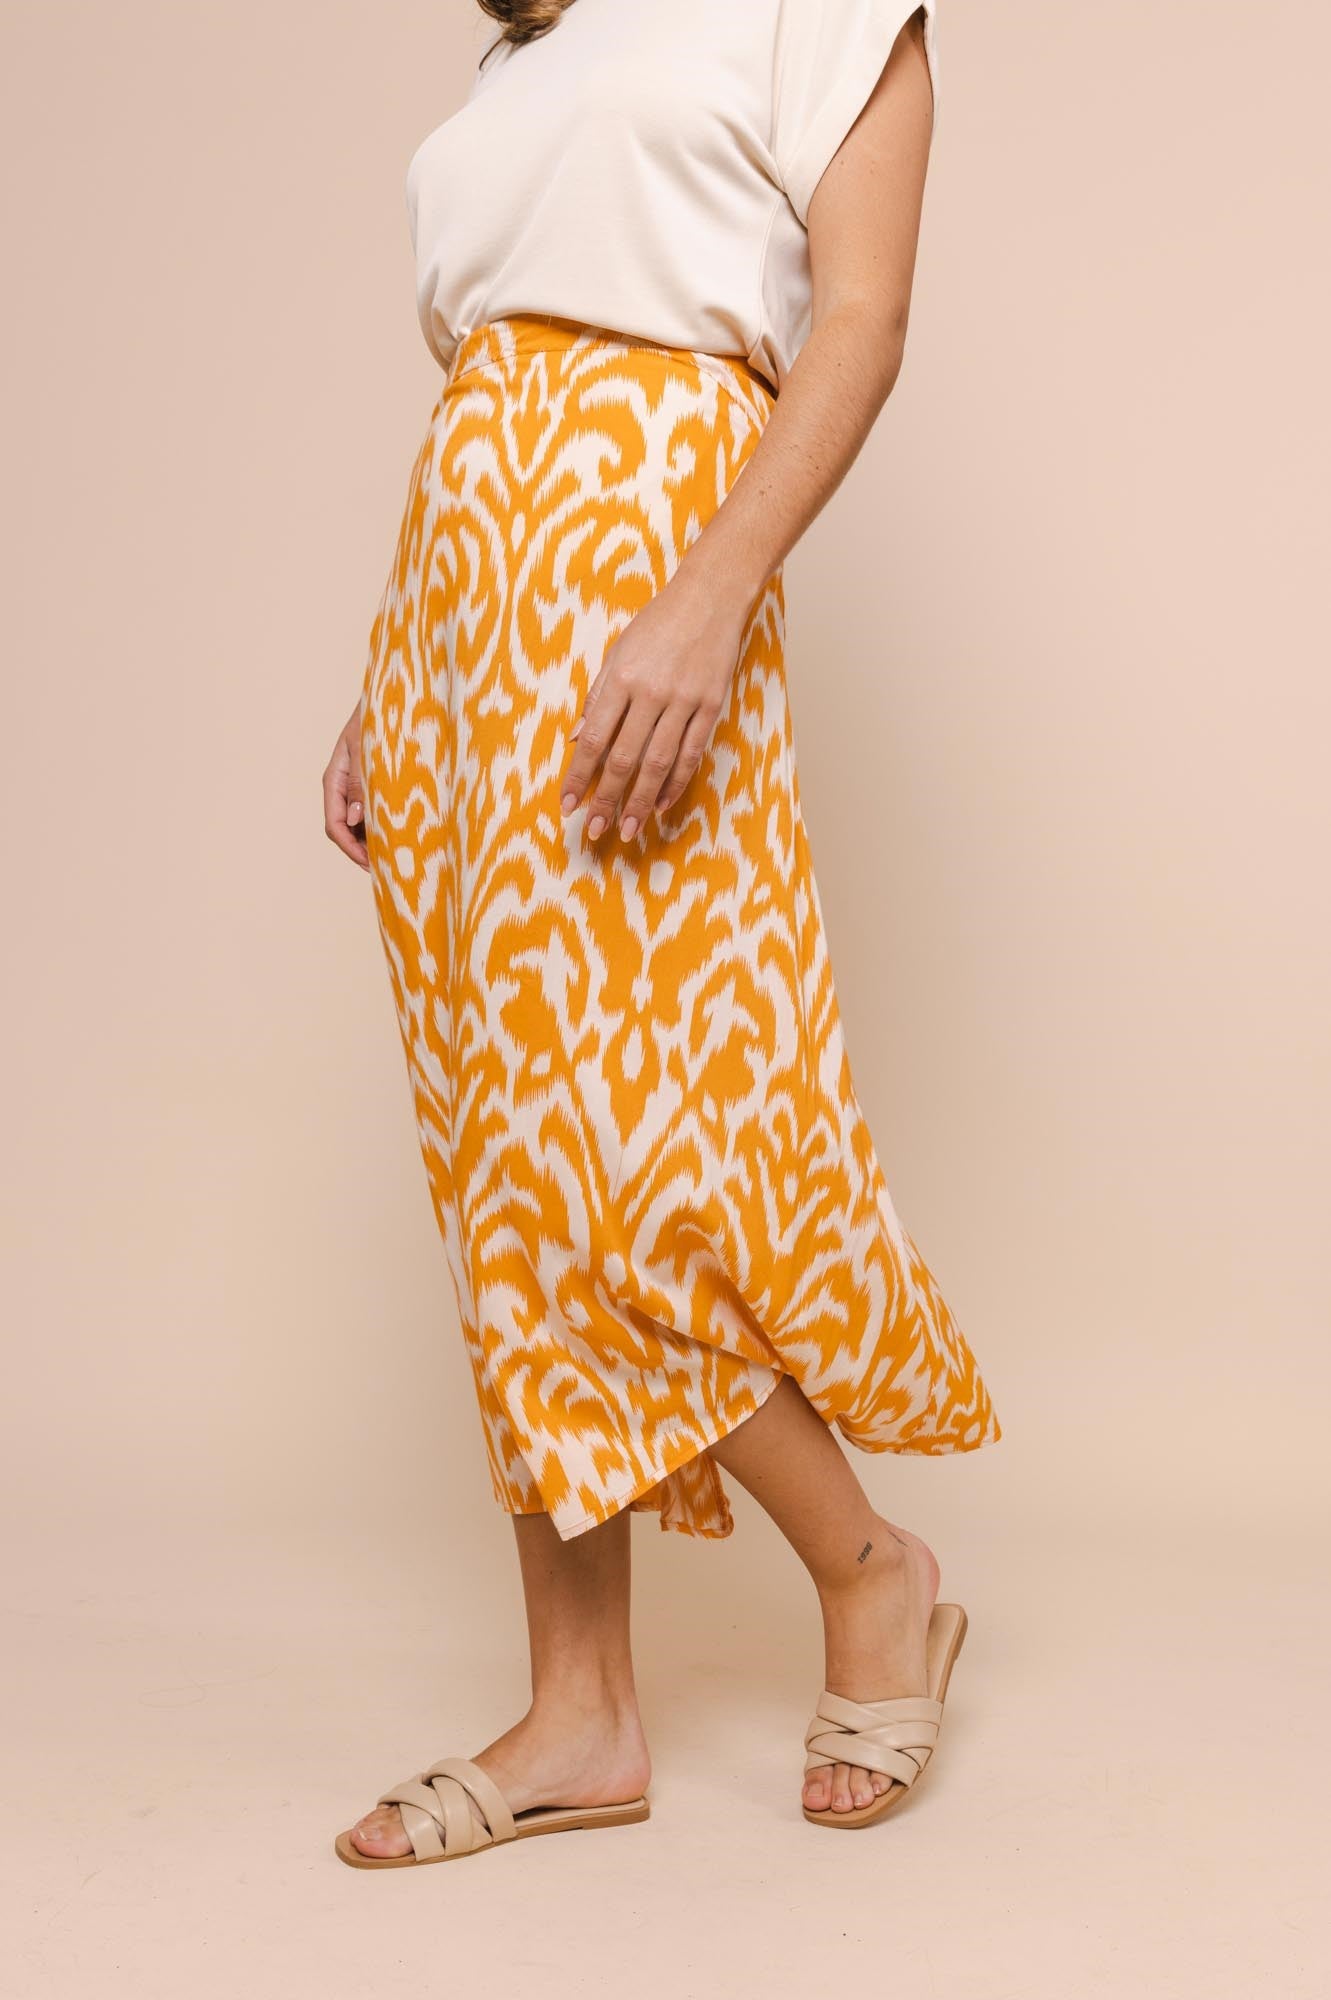 Batik beauty marigold